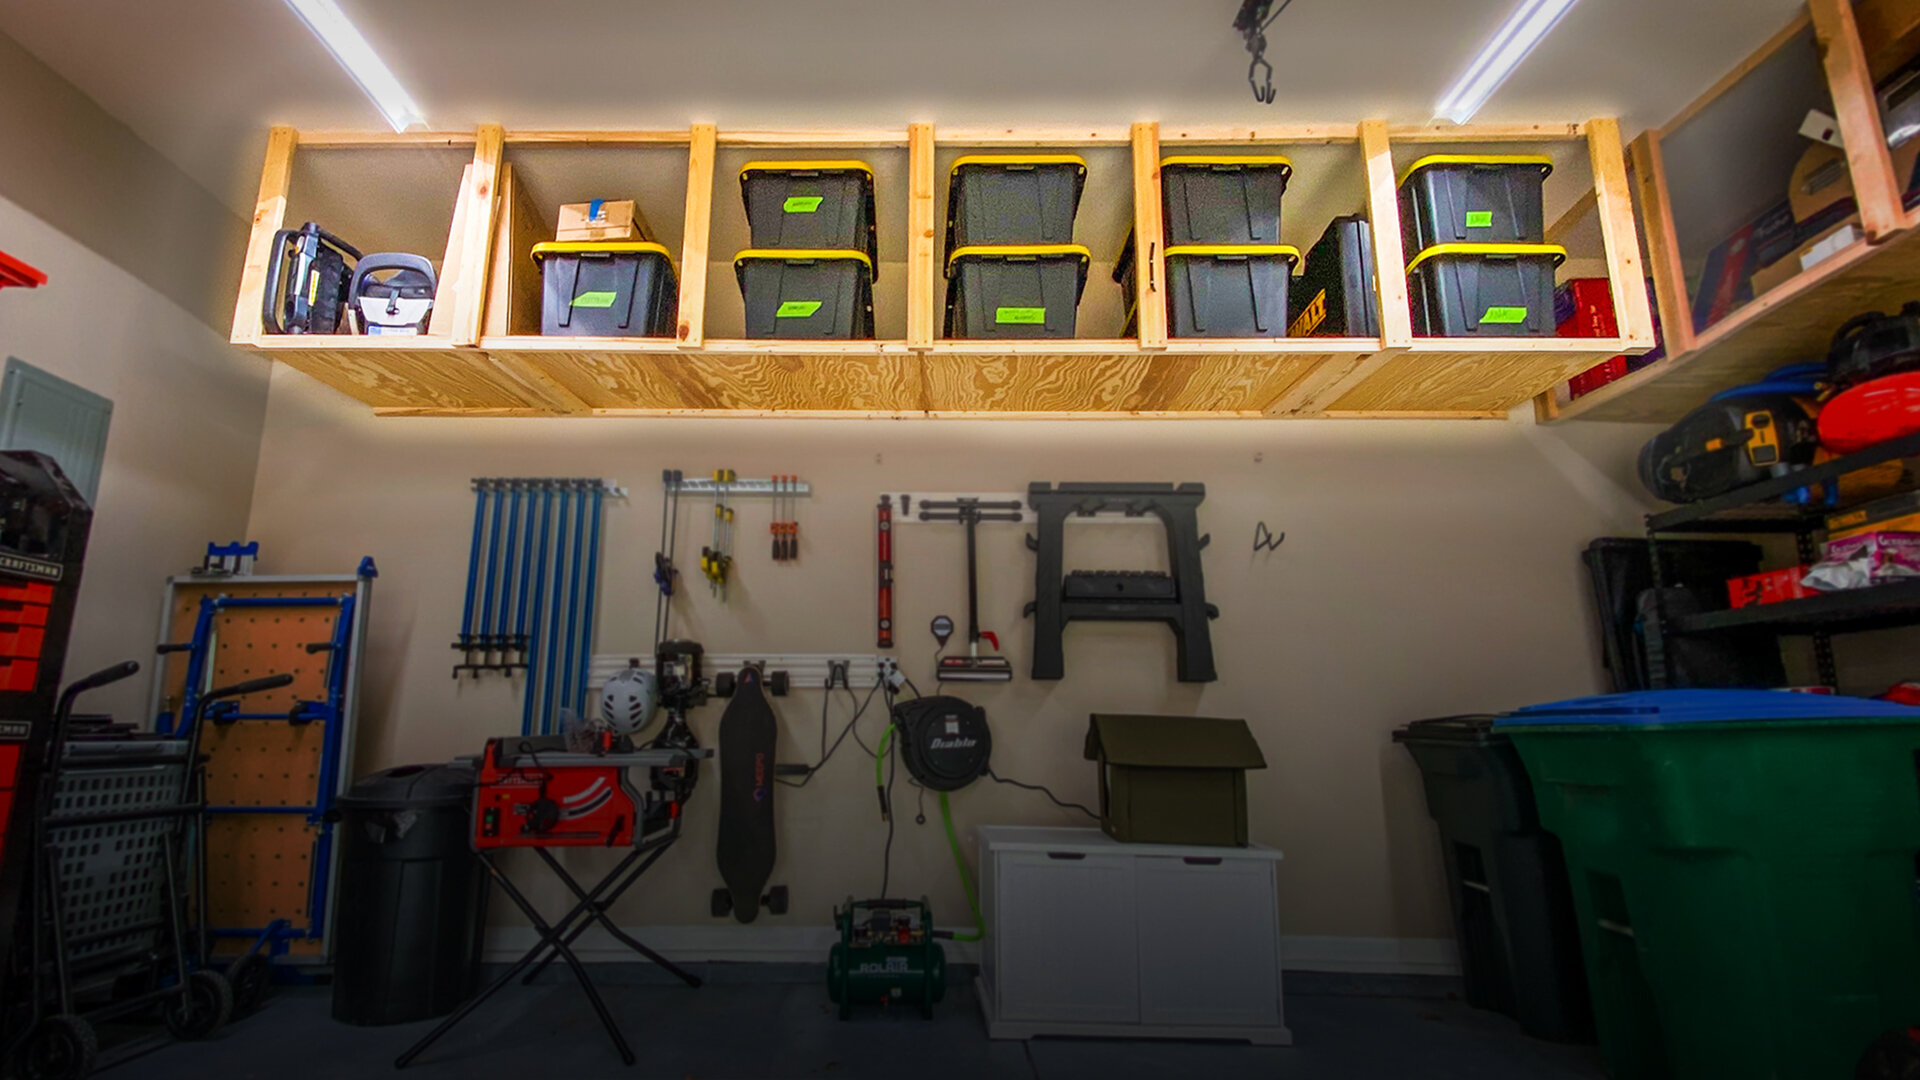 How To Build Diy Garage Storage Shelves, How To Make Garage Shelves